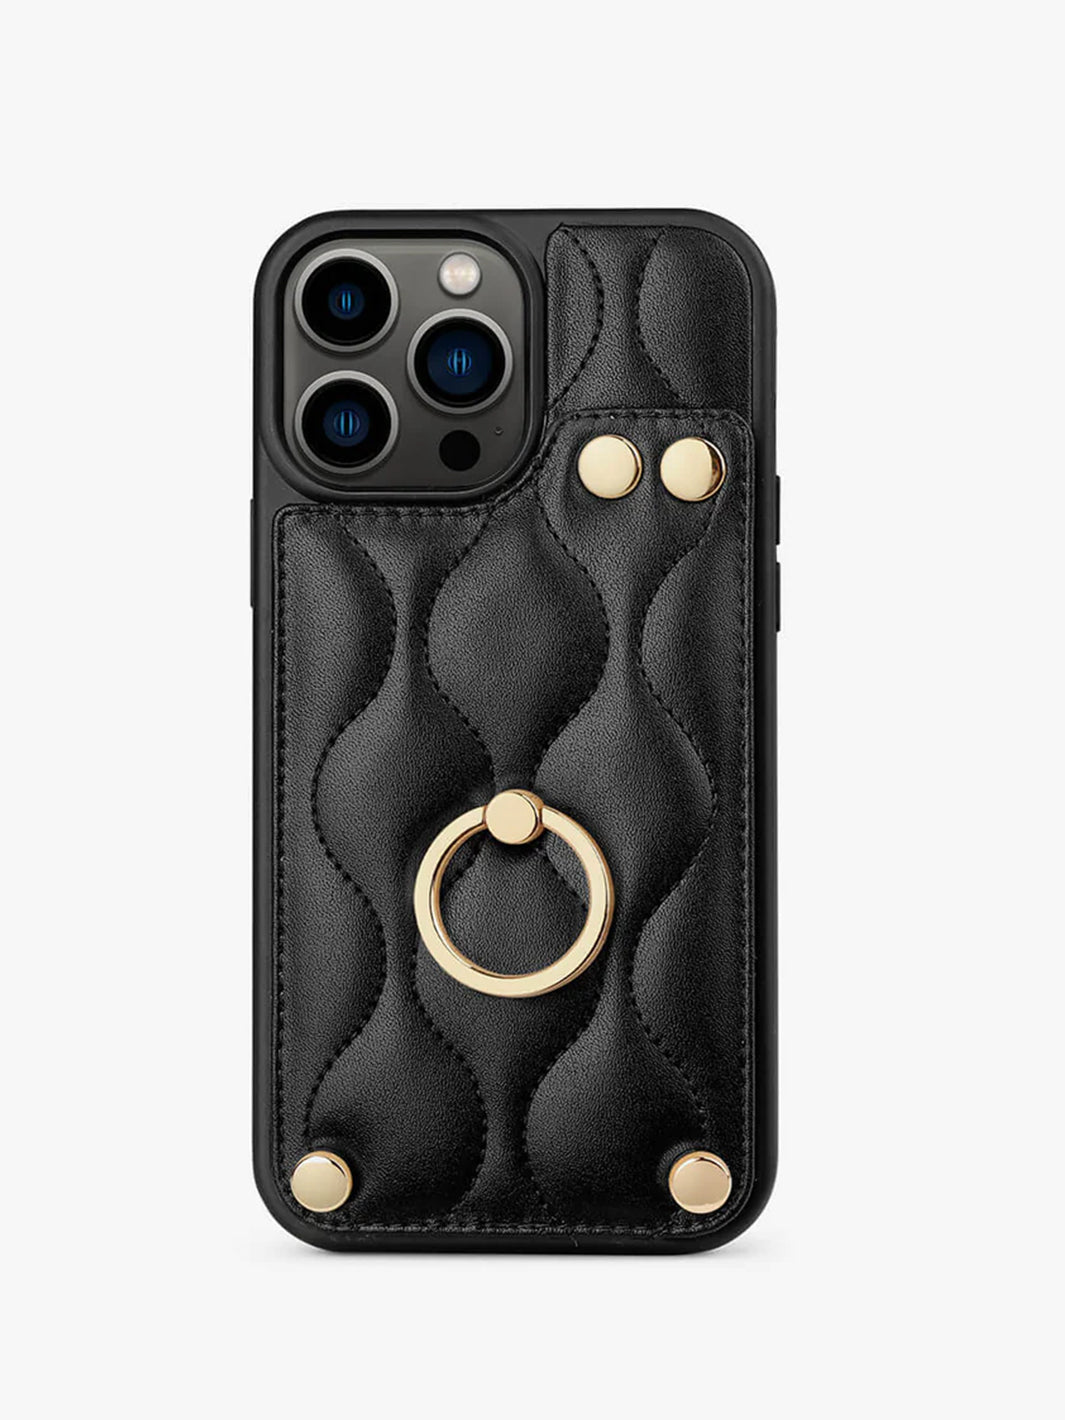 Black Puffy iPhone Case